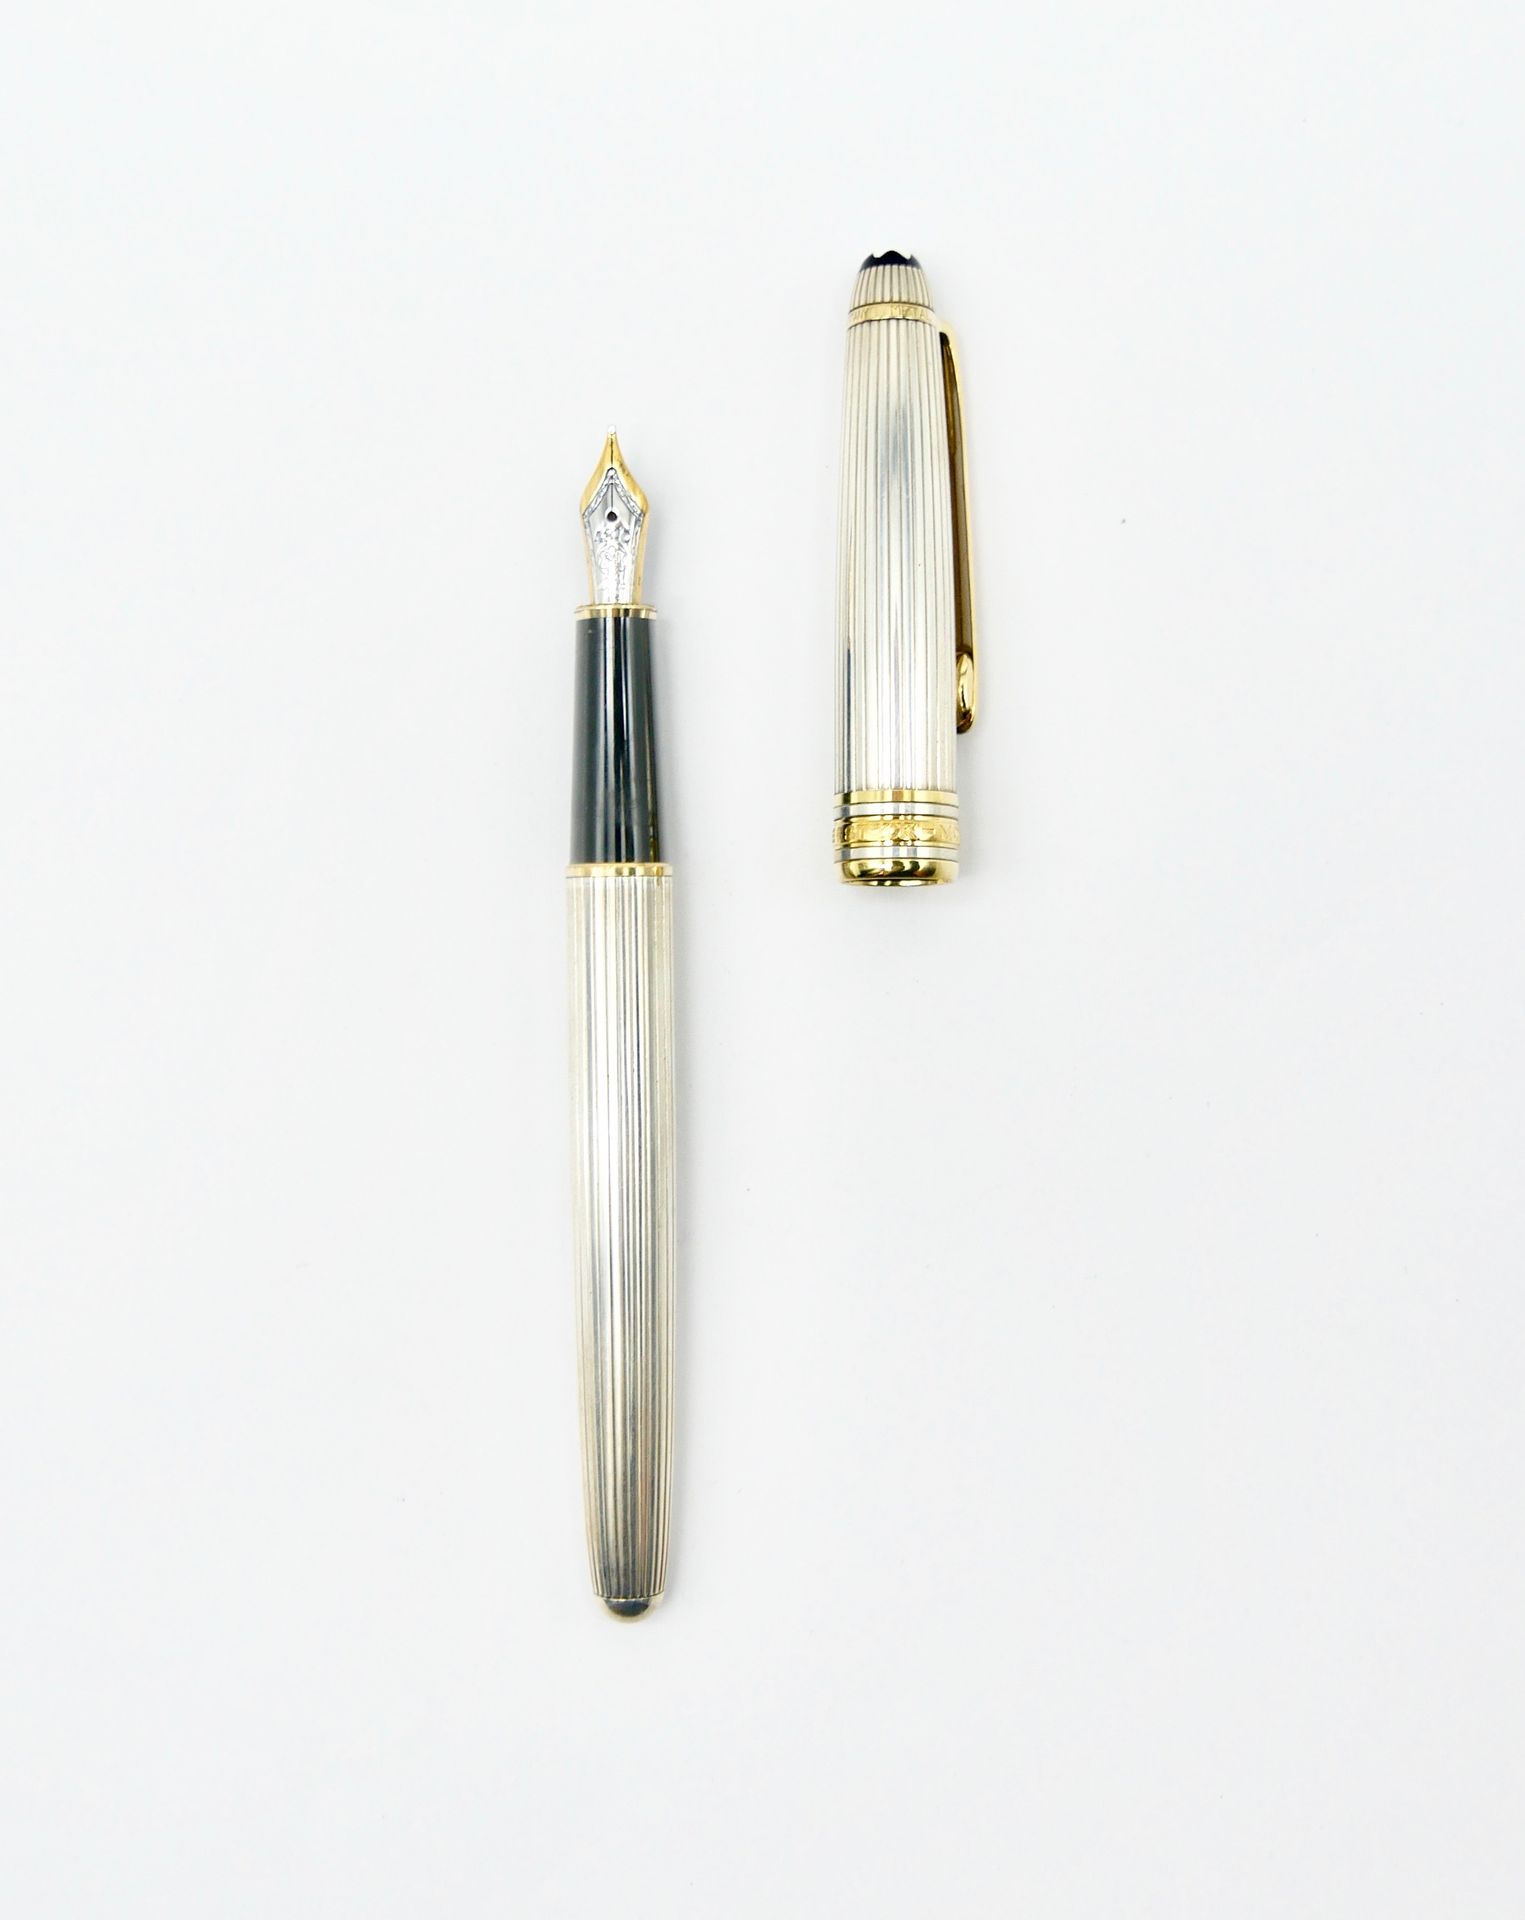 Null 蒙特布朗

大师之路》(Meisterstück)

单人纸牌天赋164

钢笔，银色925/1000，金色750/1000笔尖，经典款

编号为ED&hellip;